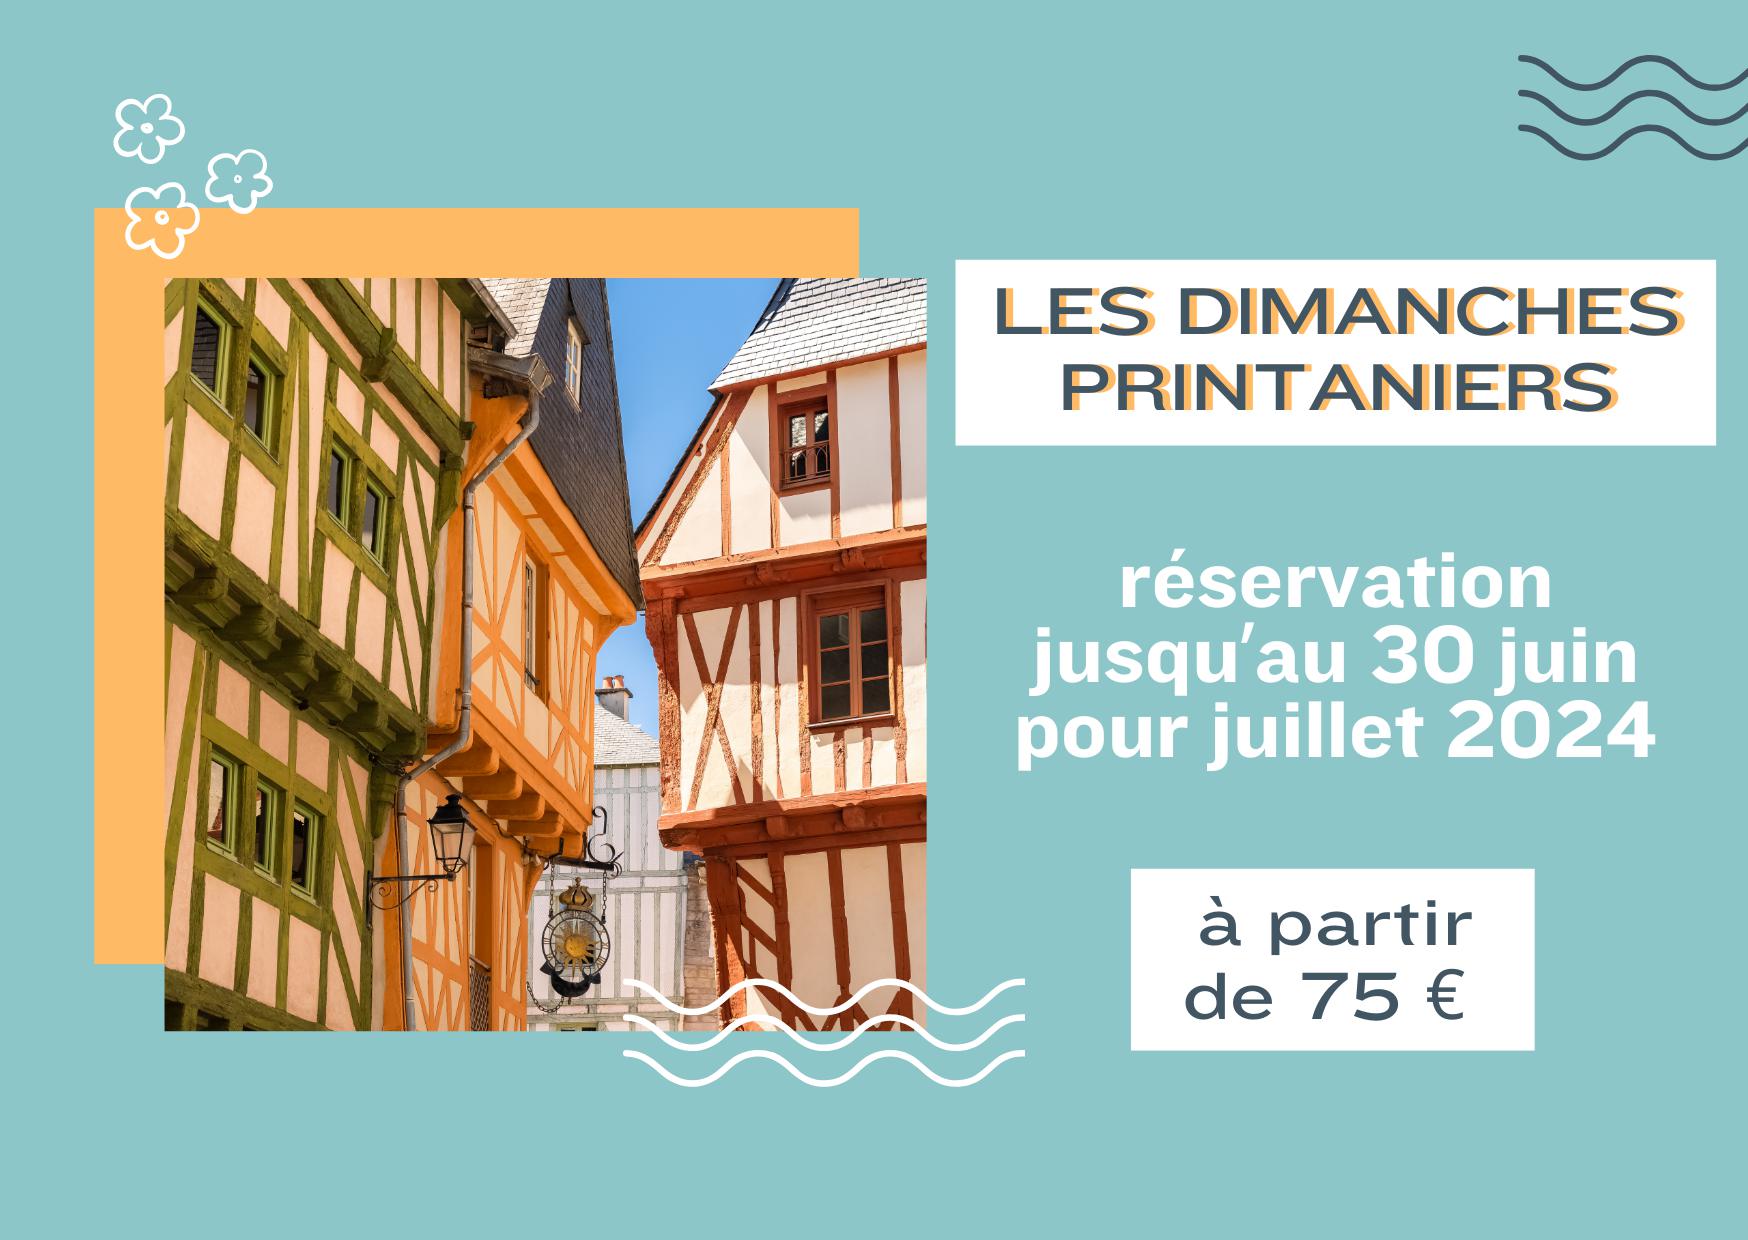 PACKAGE HOTEL VANNES : Les Dimanches Printaniers